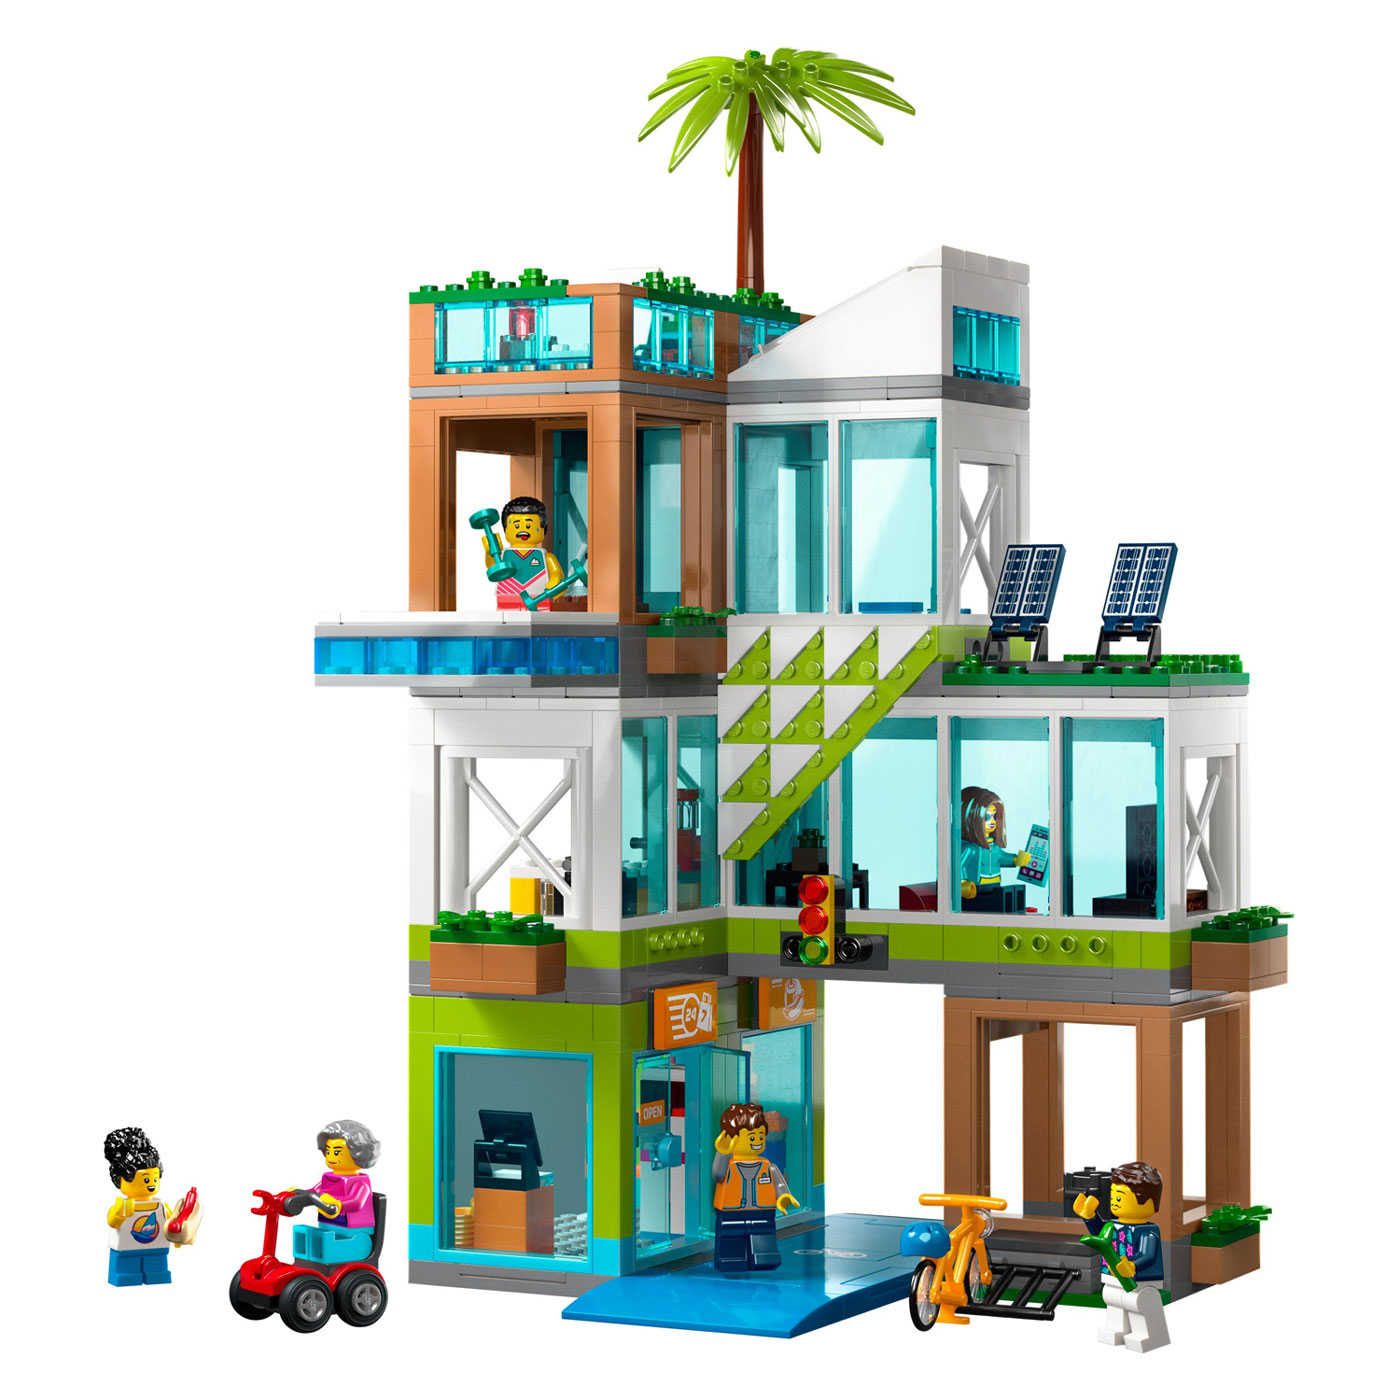 60365 L'immeuble LEGO City